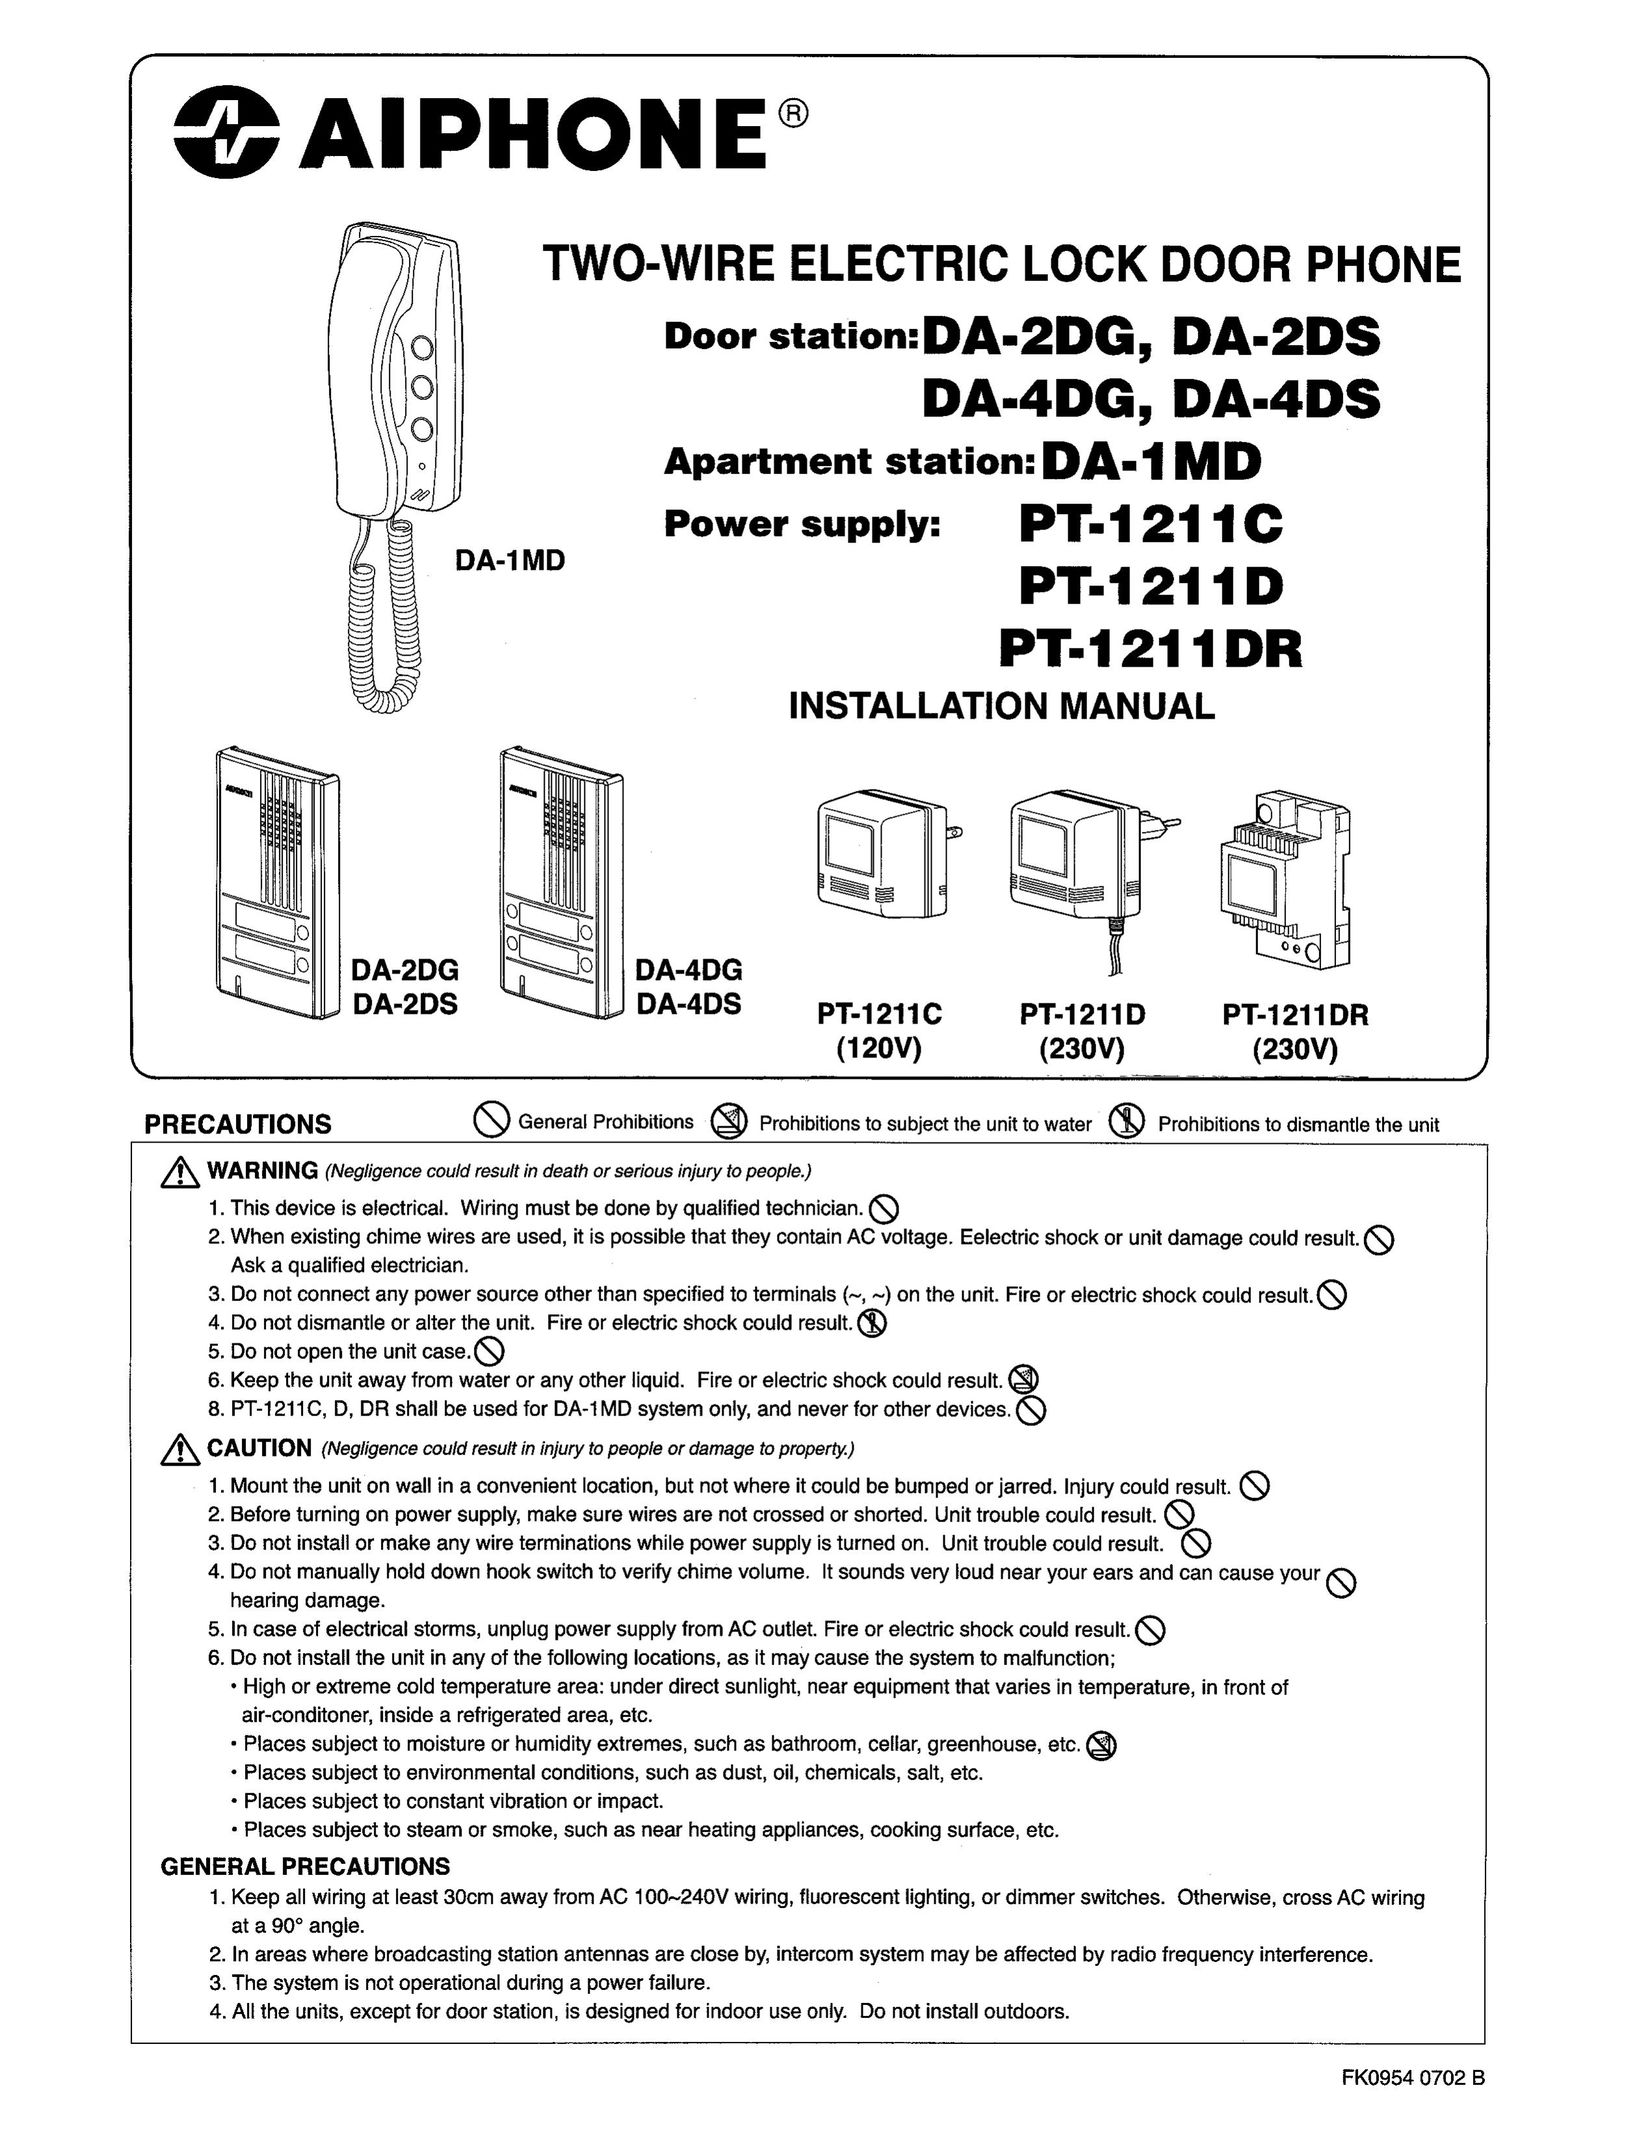 Aiphone DA-4DG Home Security System User Manual